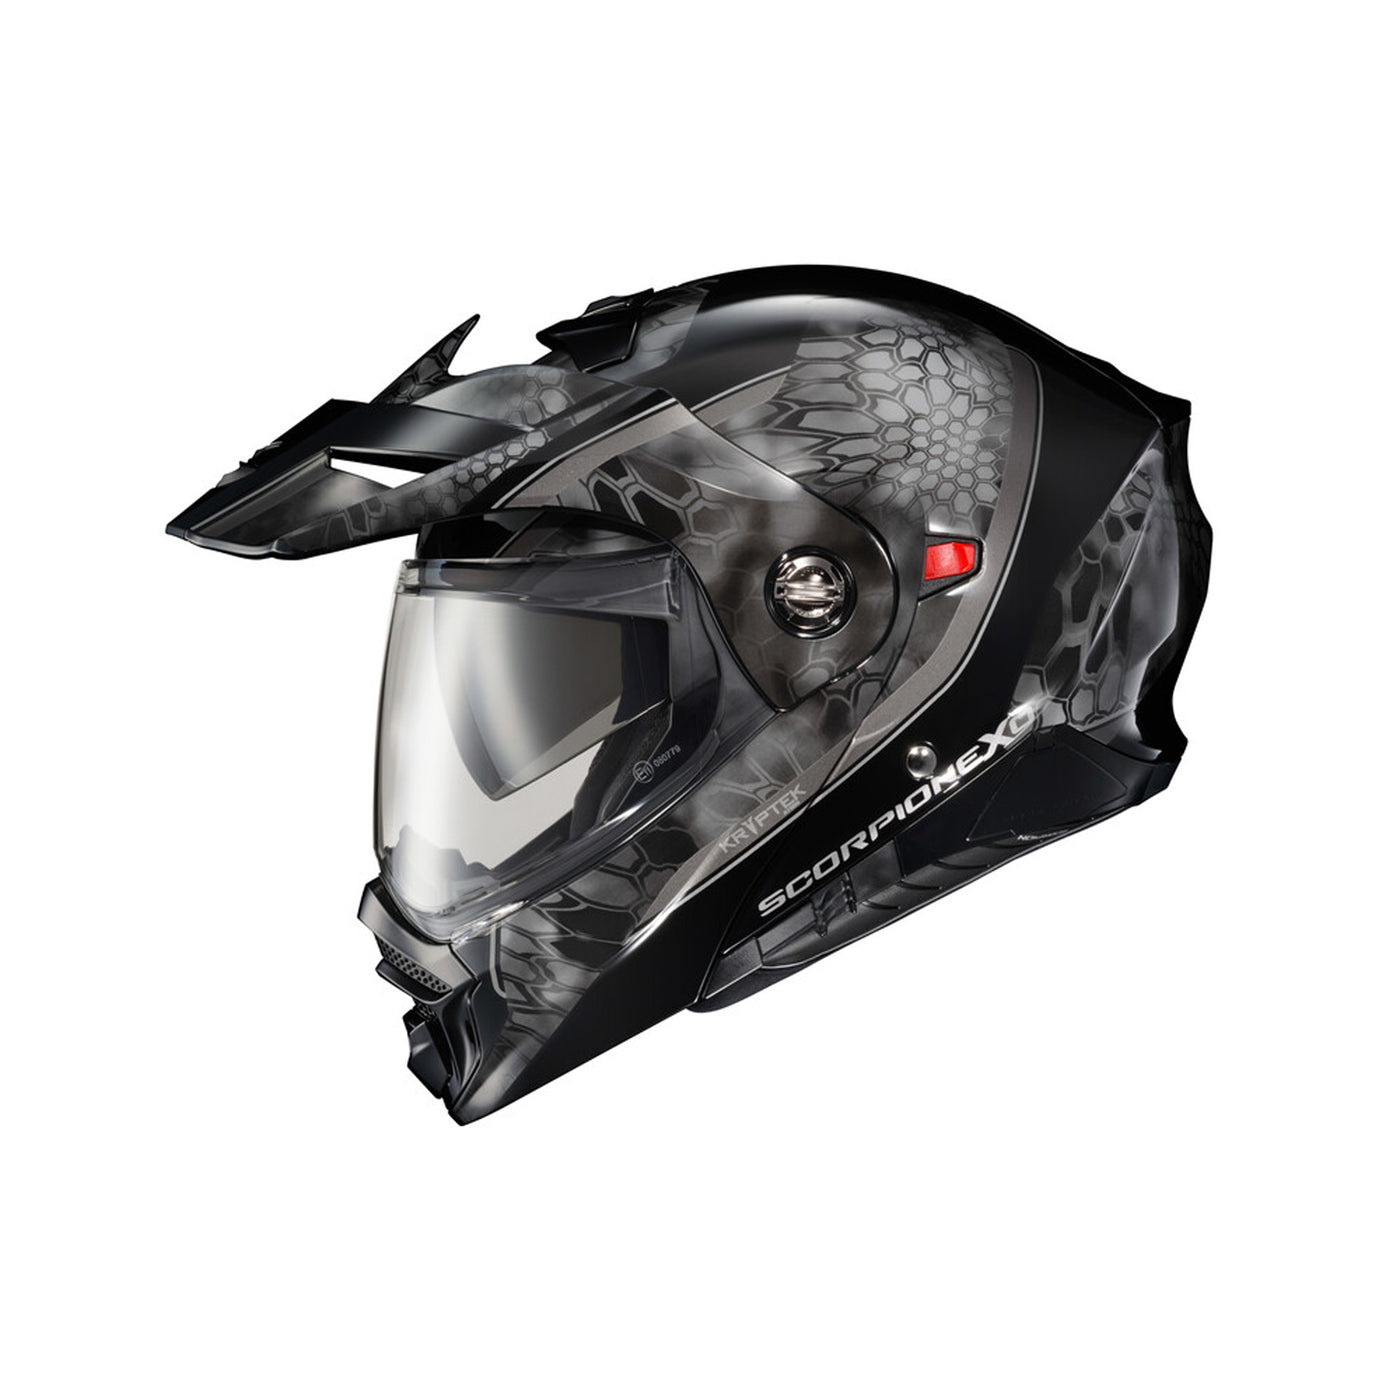 SCORPION EXO EXO-AT960 Kryptek Modular Helmet